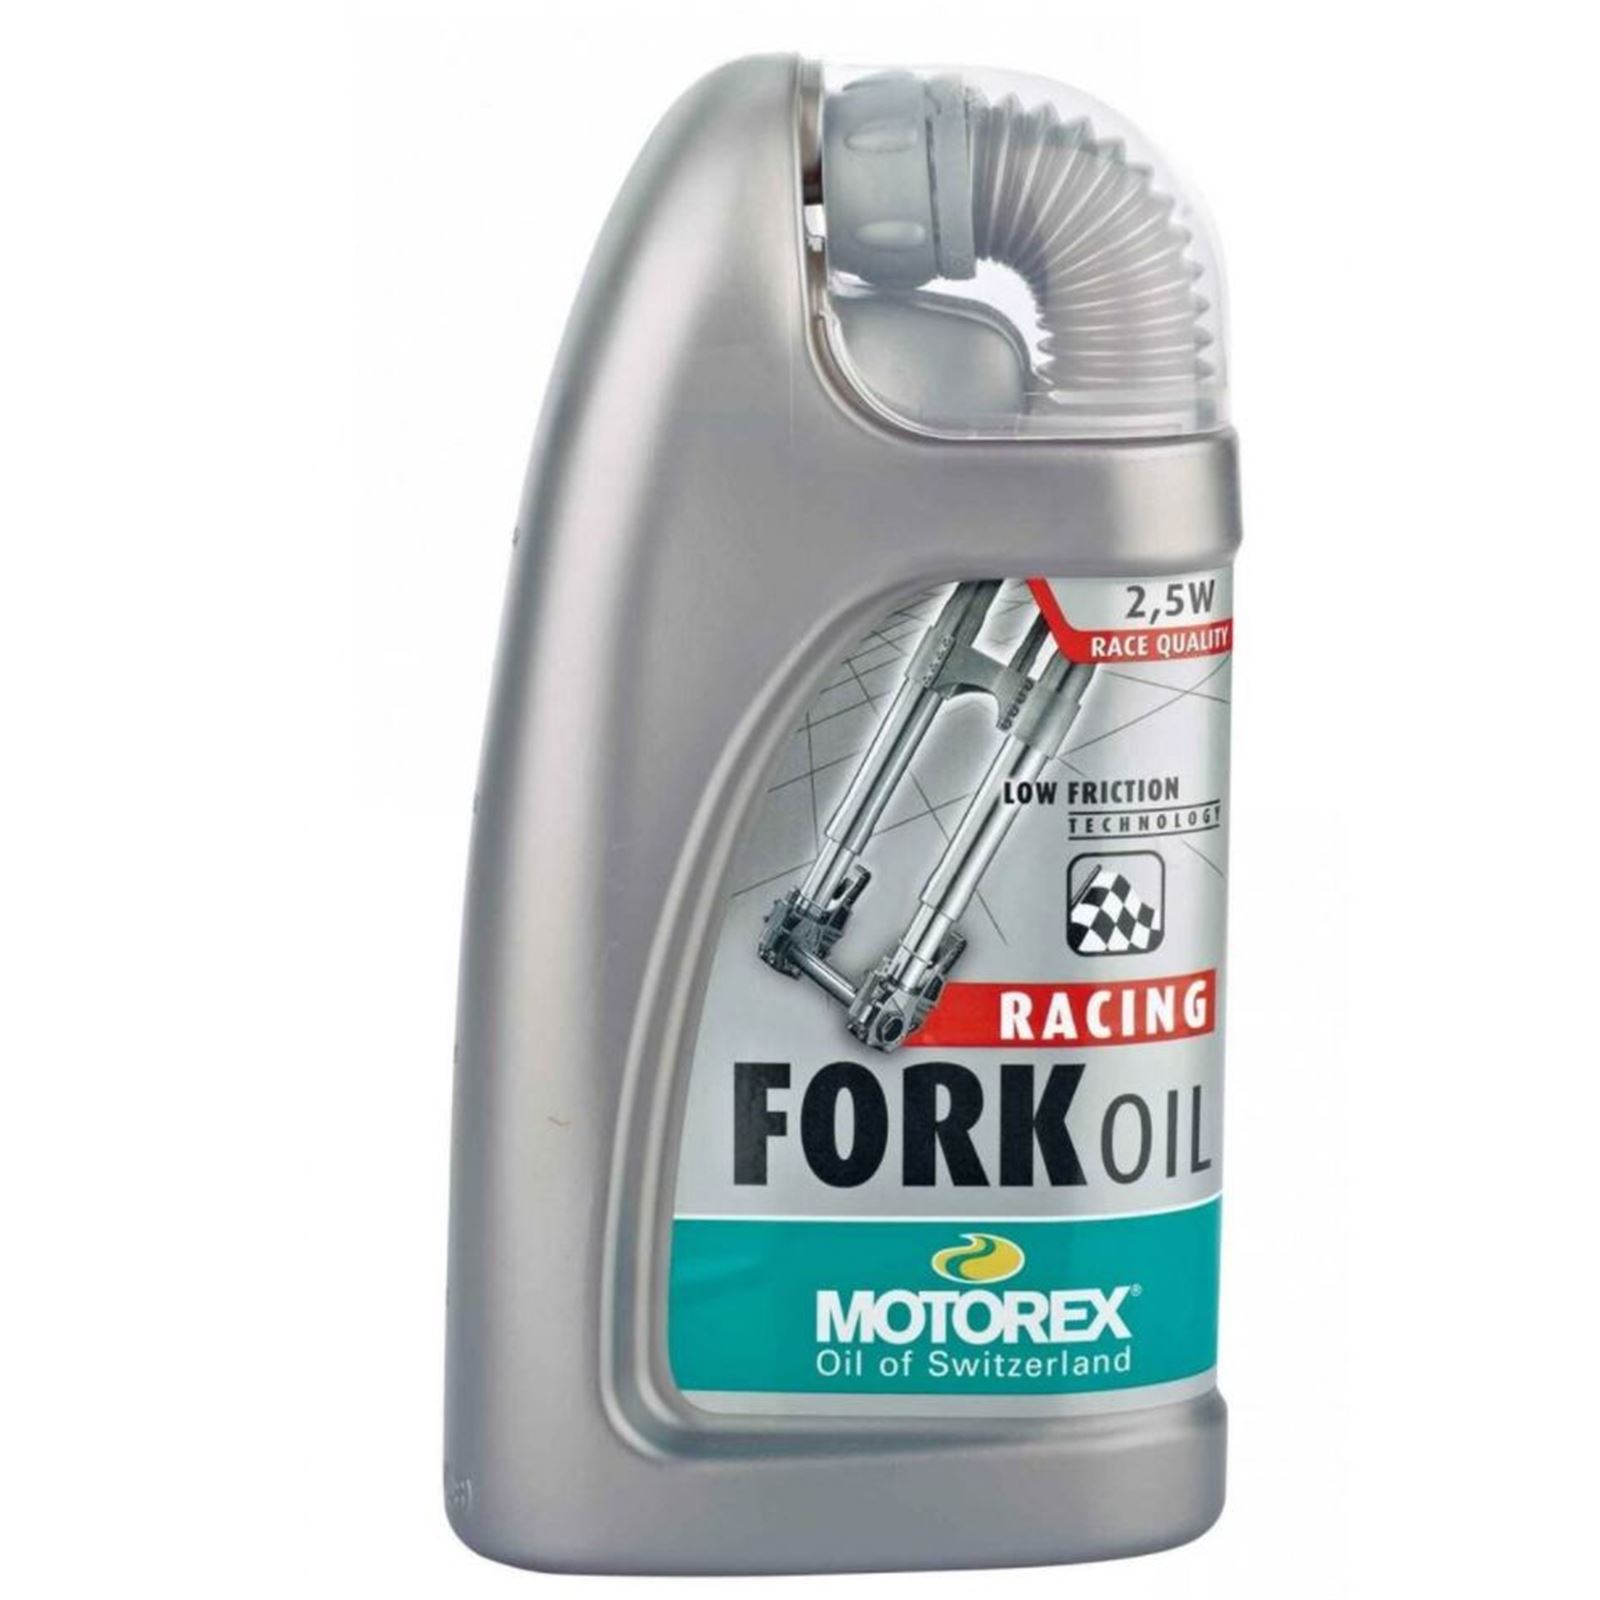 Motorex Low Friction Racing Fork Oil 2.5W 59 LT